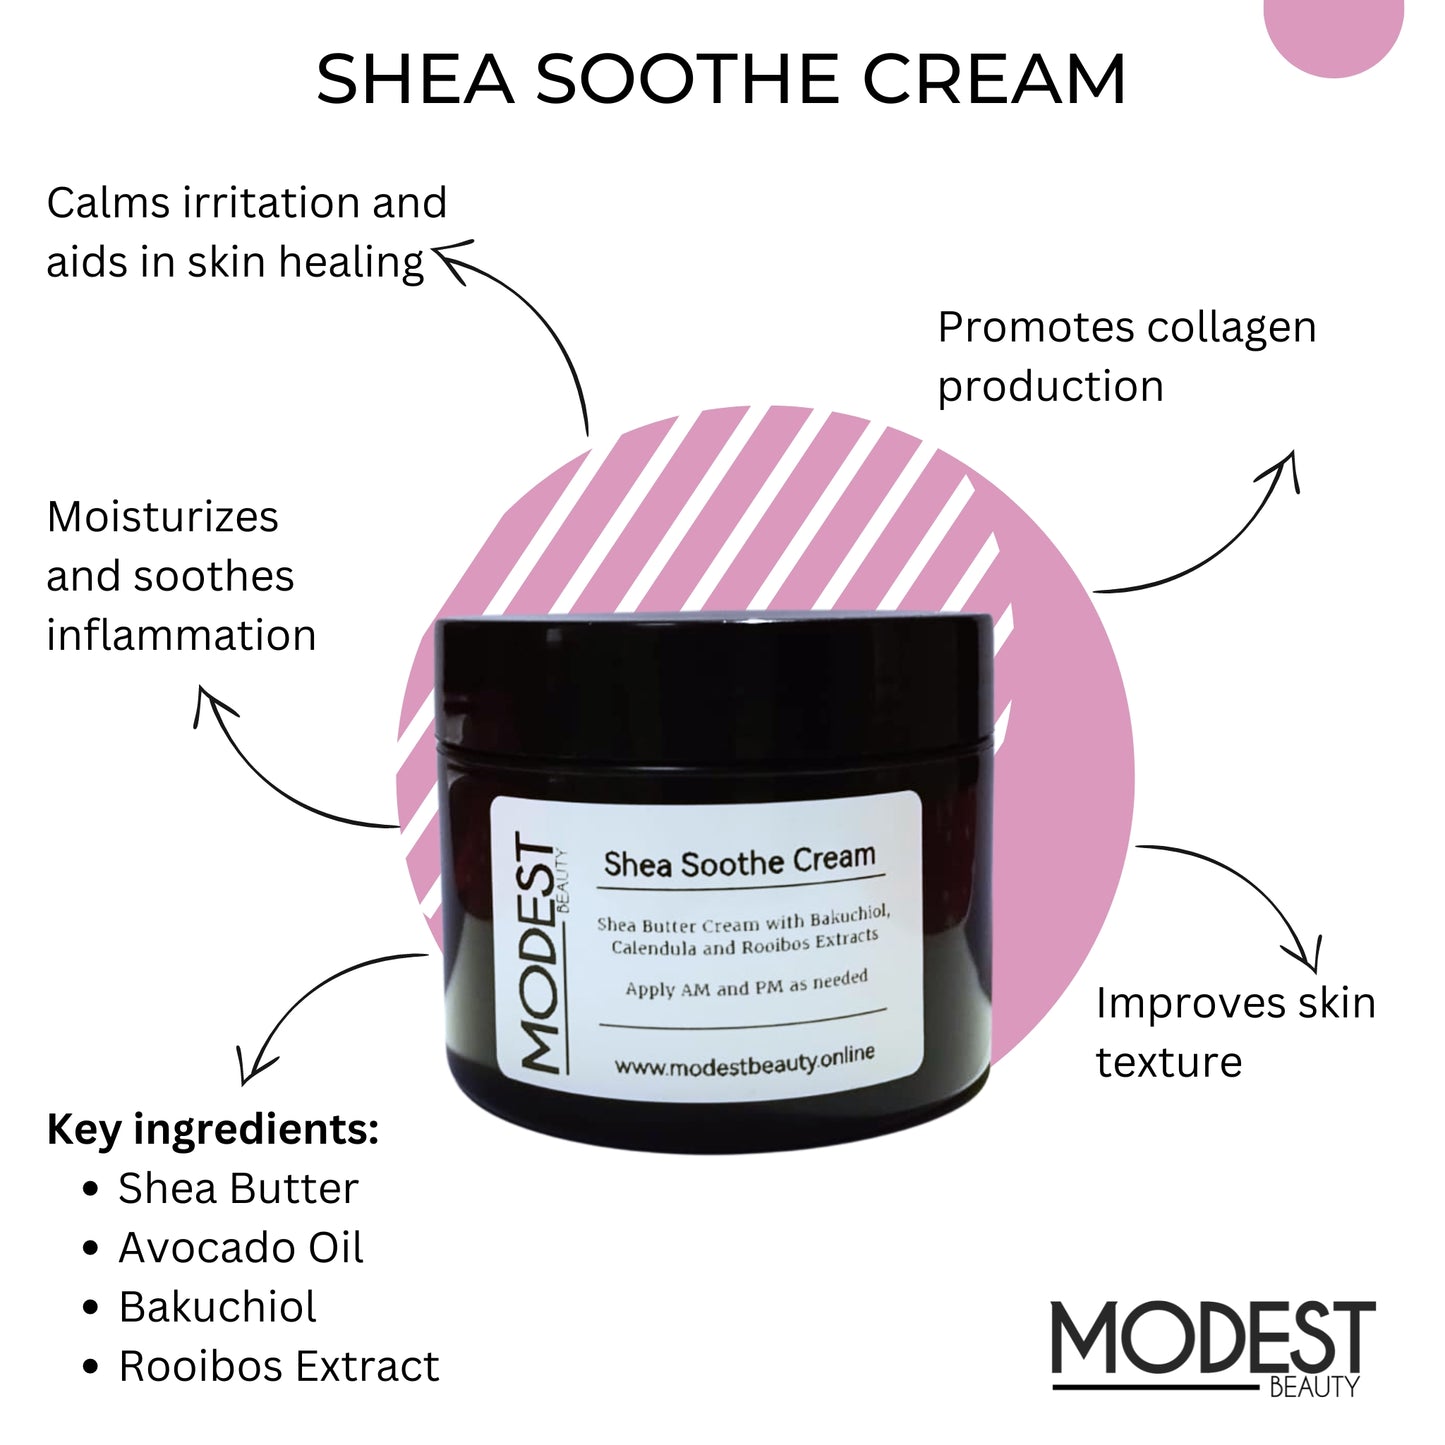 Shea Soothe Cream (Eczema Cream)